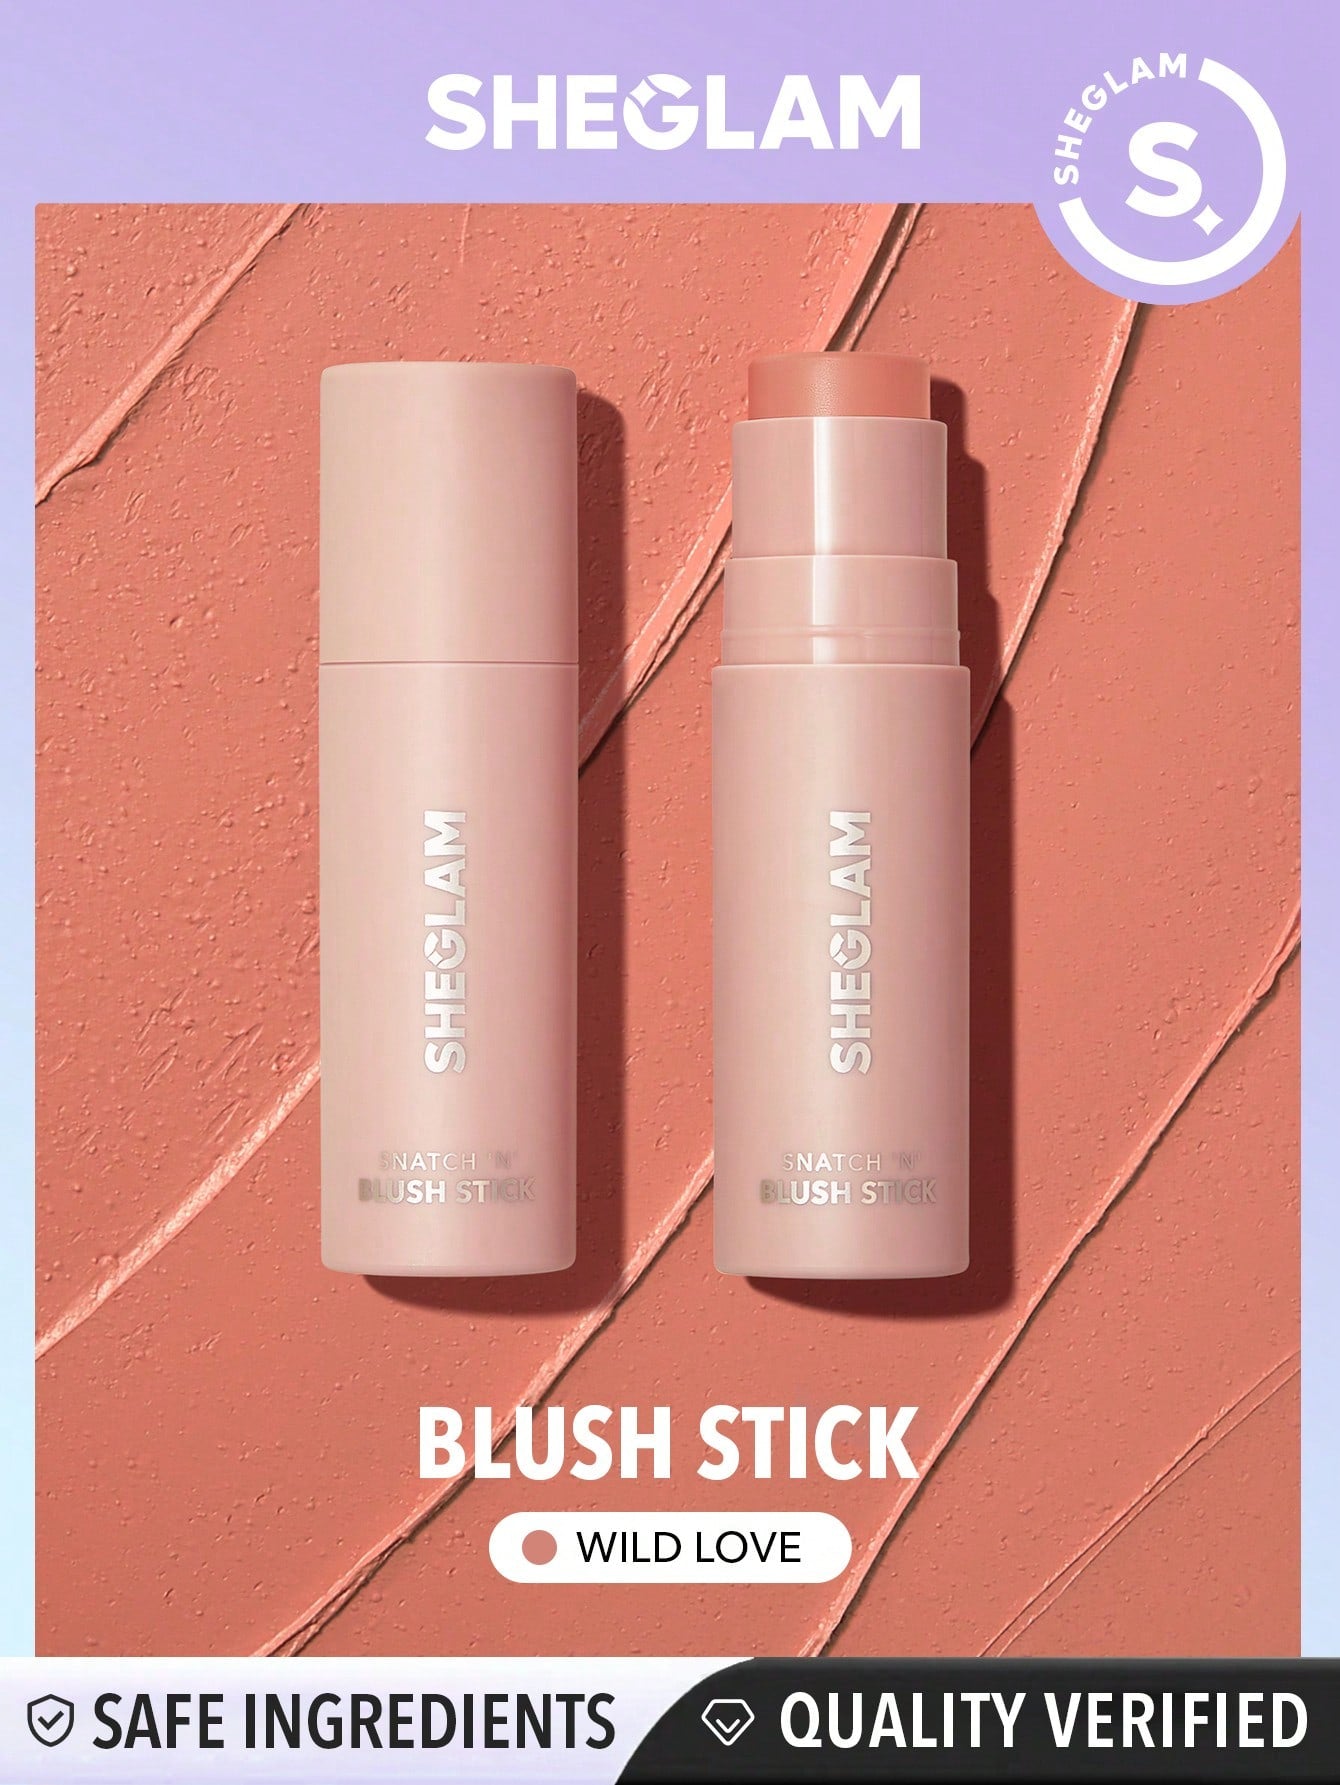 SHEGLAM Snatch 'n' Blush Stick-Midnight Hour Cream Blush Waterproof Long Lasting High Pigment - Negative Apparel